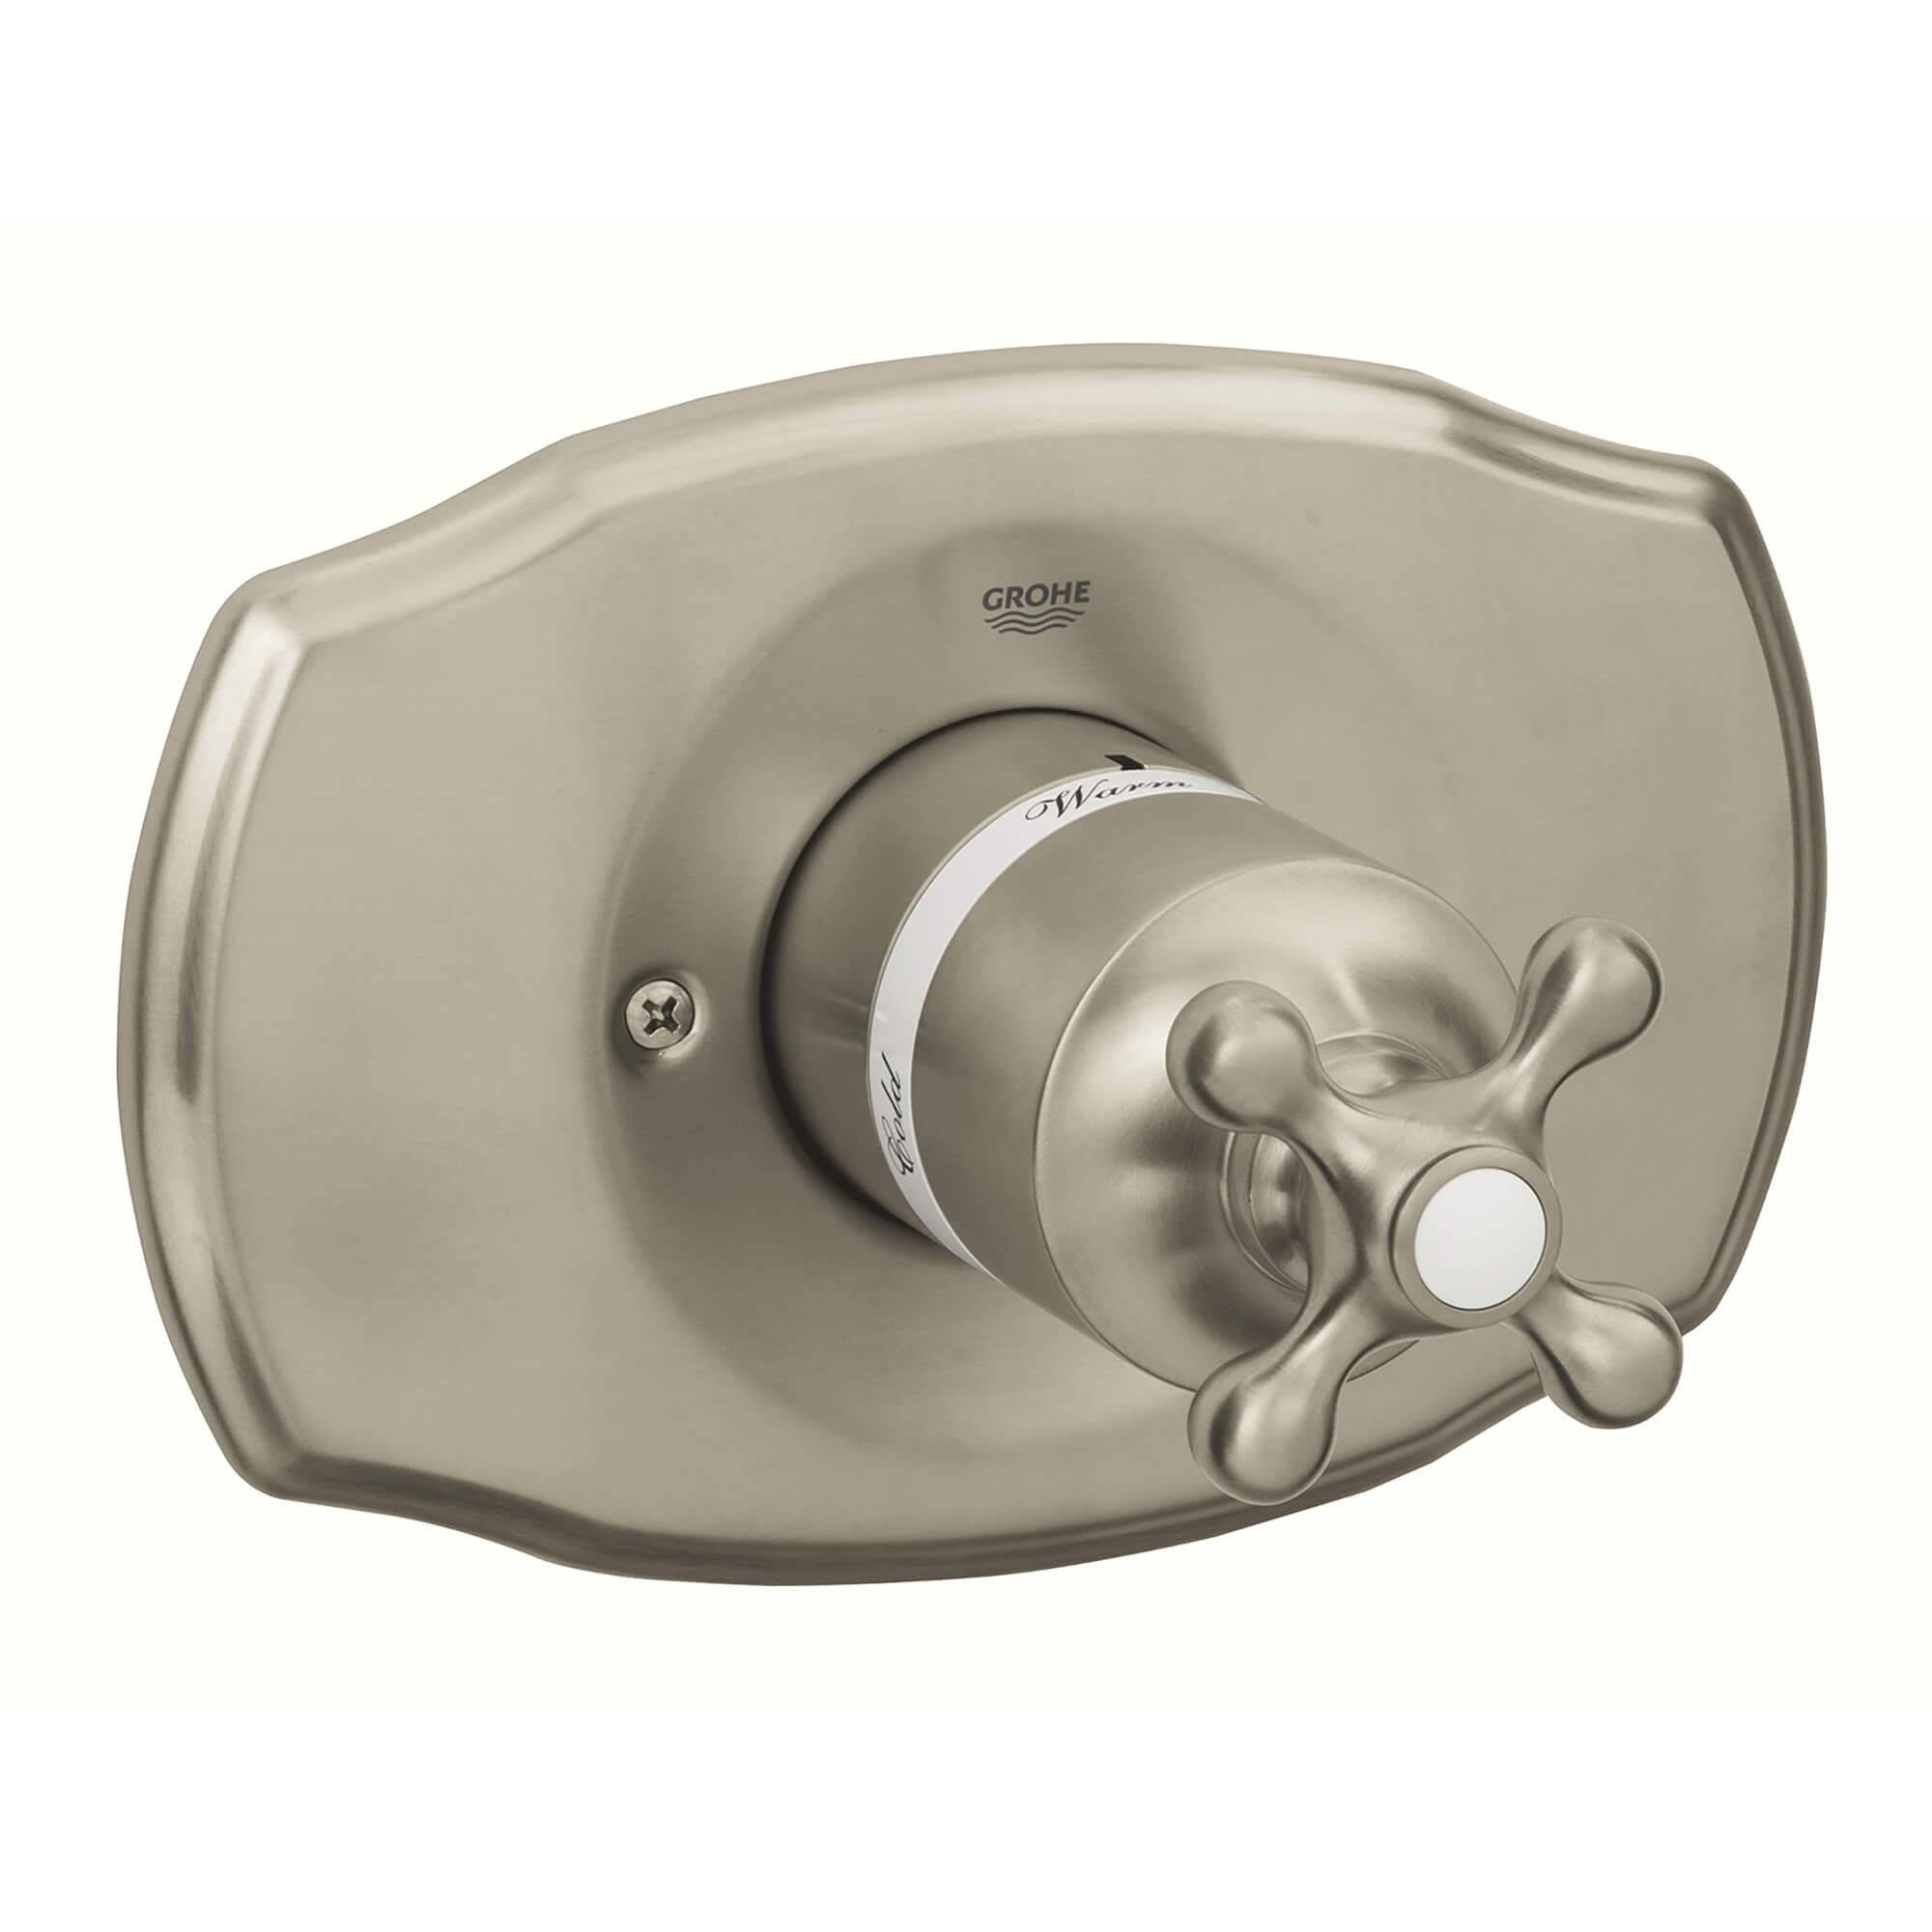 GROHE Seabury® Pressure Balance Shower Faucet Trim with Cross Handle   Reviews Wayfair